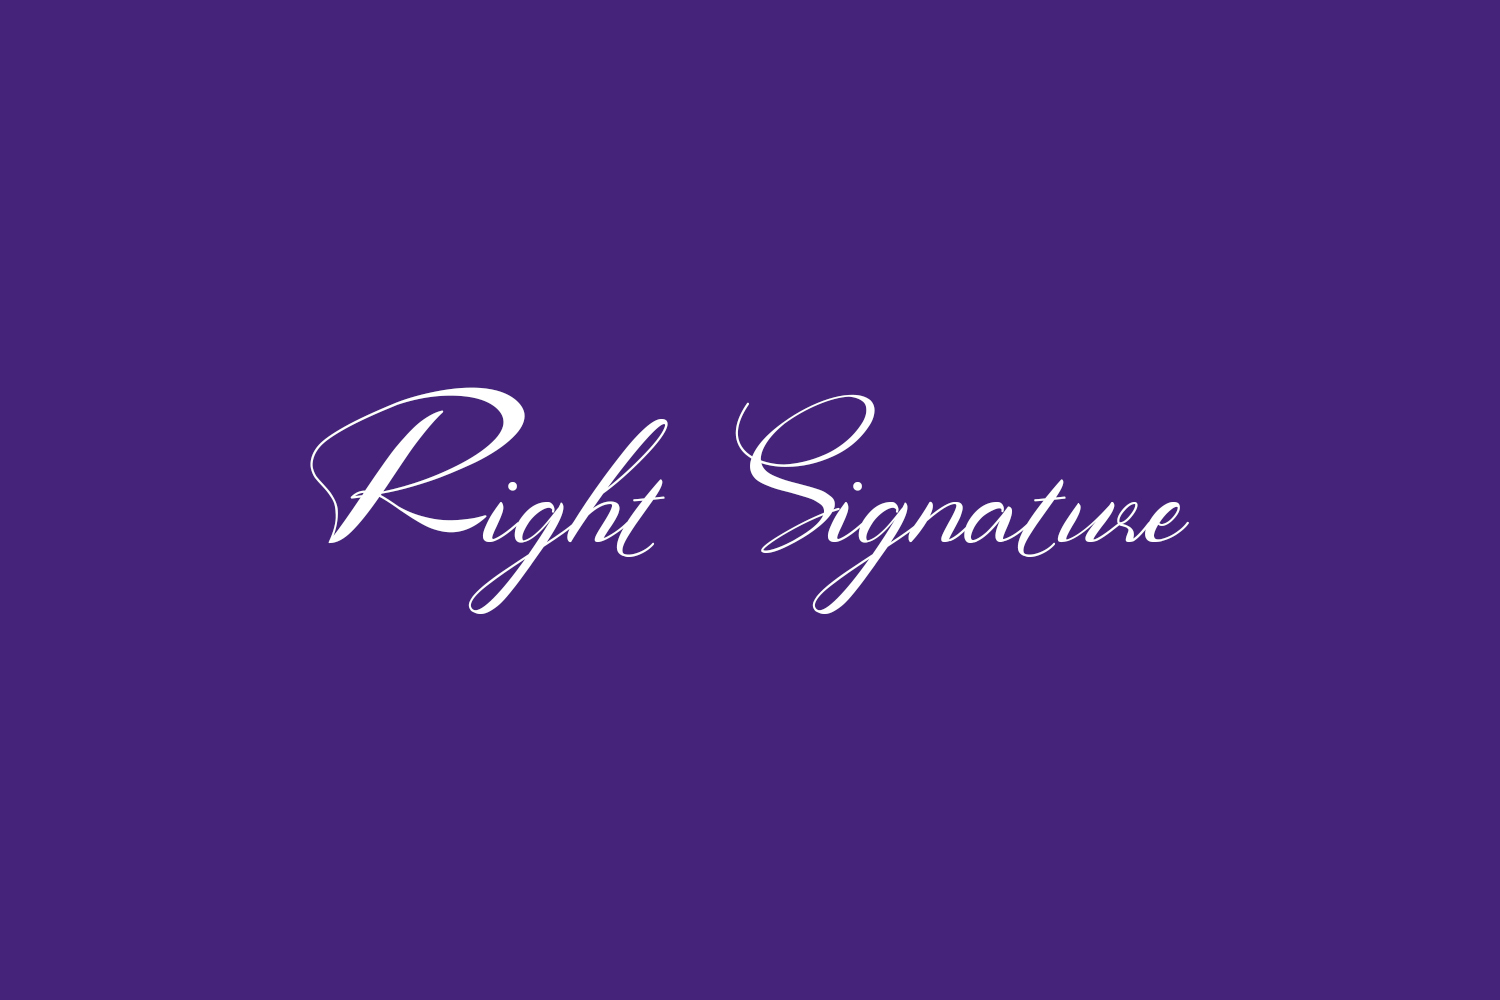 Right Signature Free Font